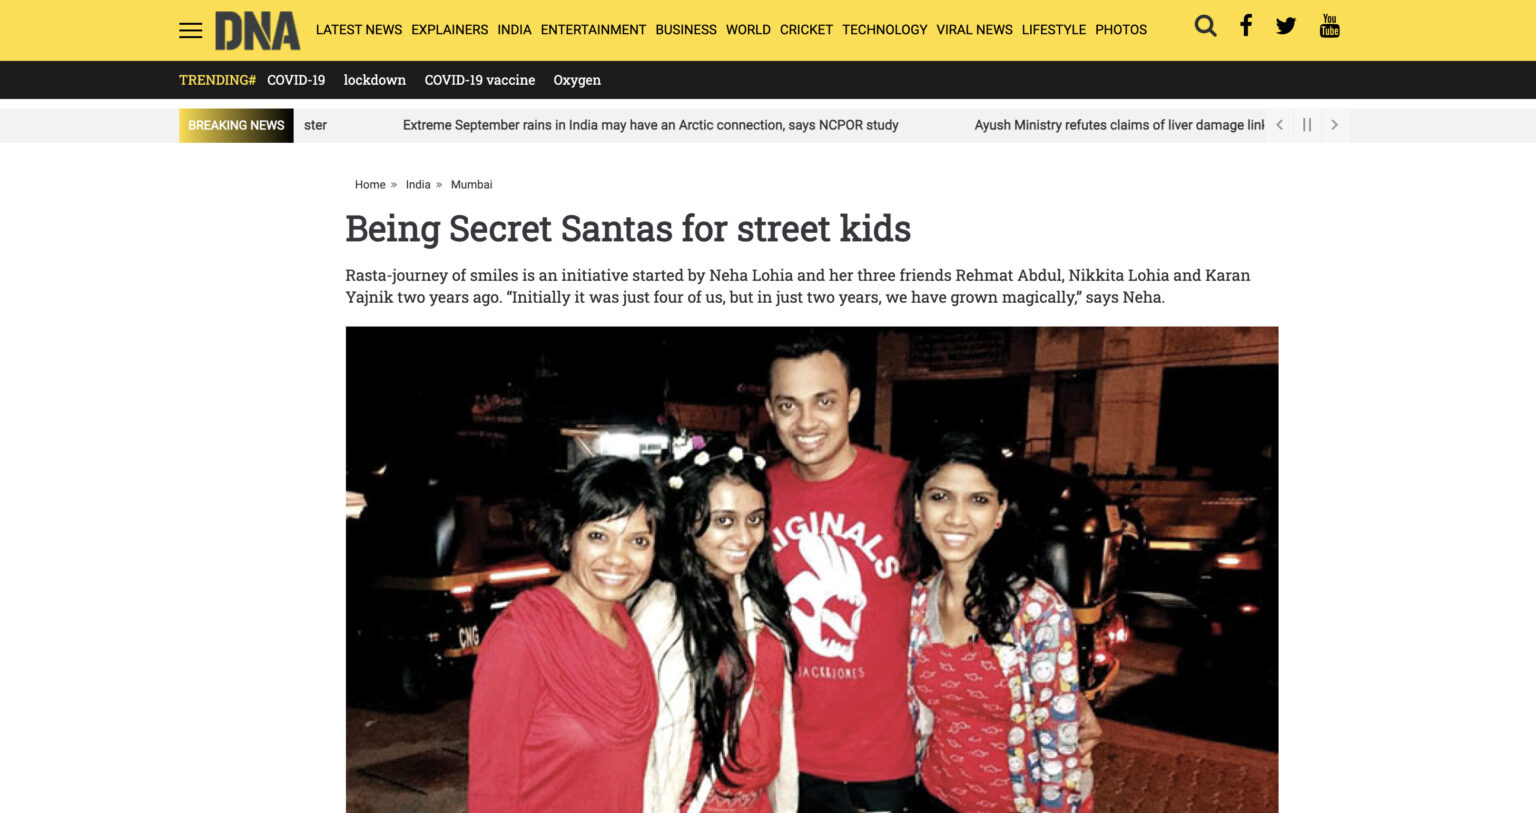 Neha Lohia and her foundation for street kids in Mumbai Rasta - A Journey of Smiles